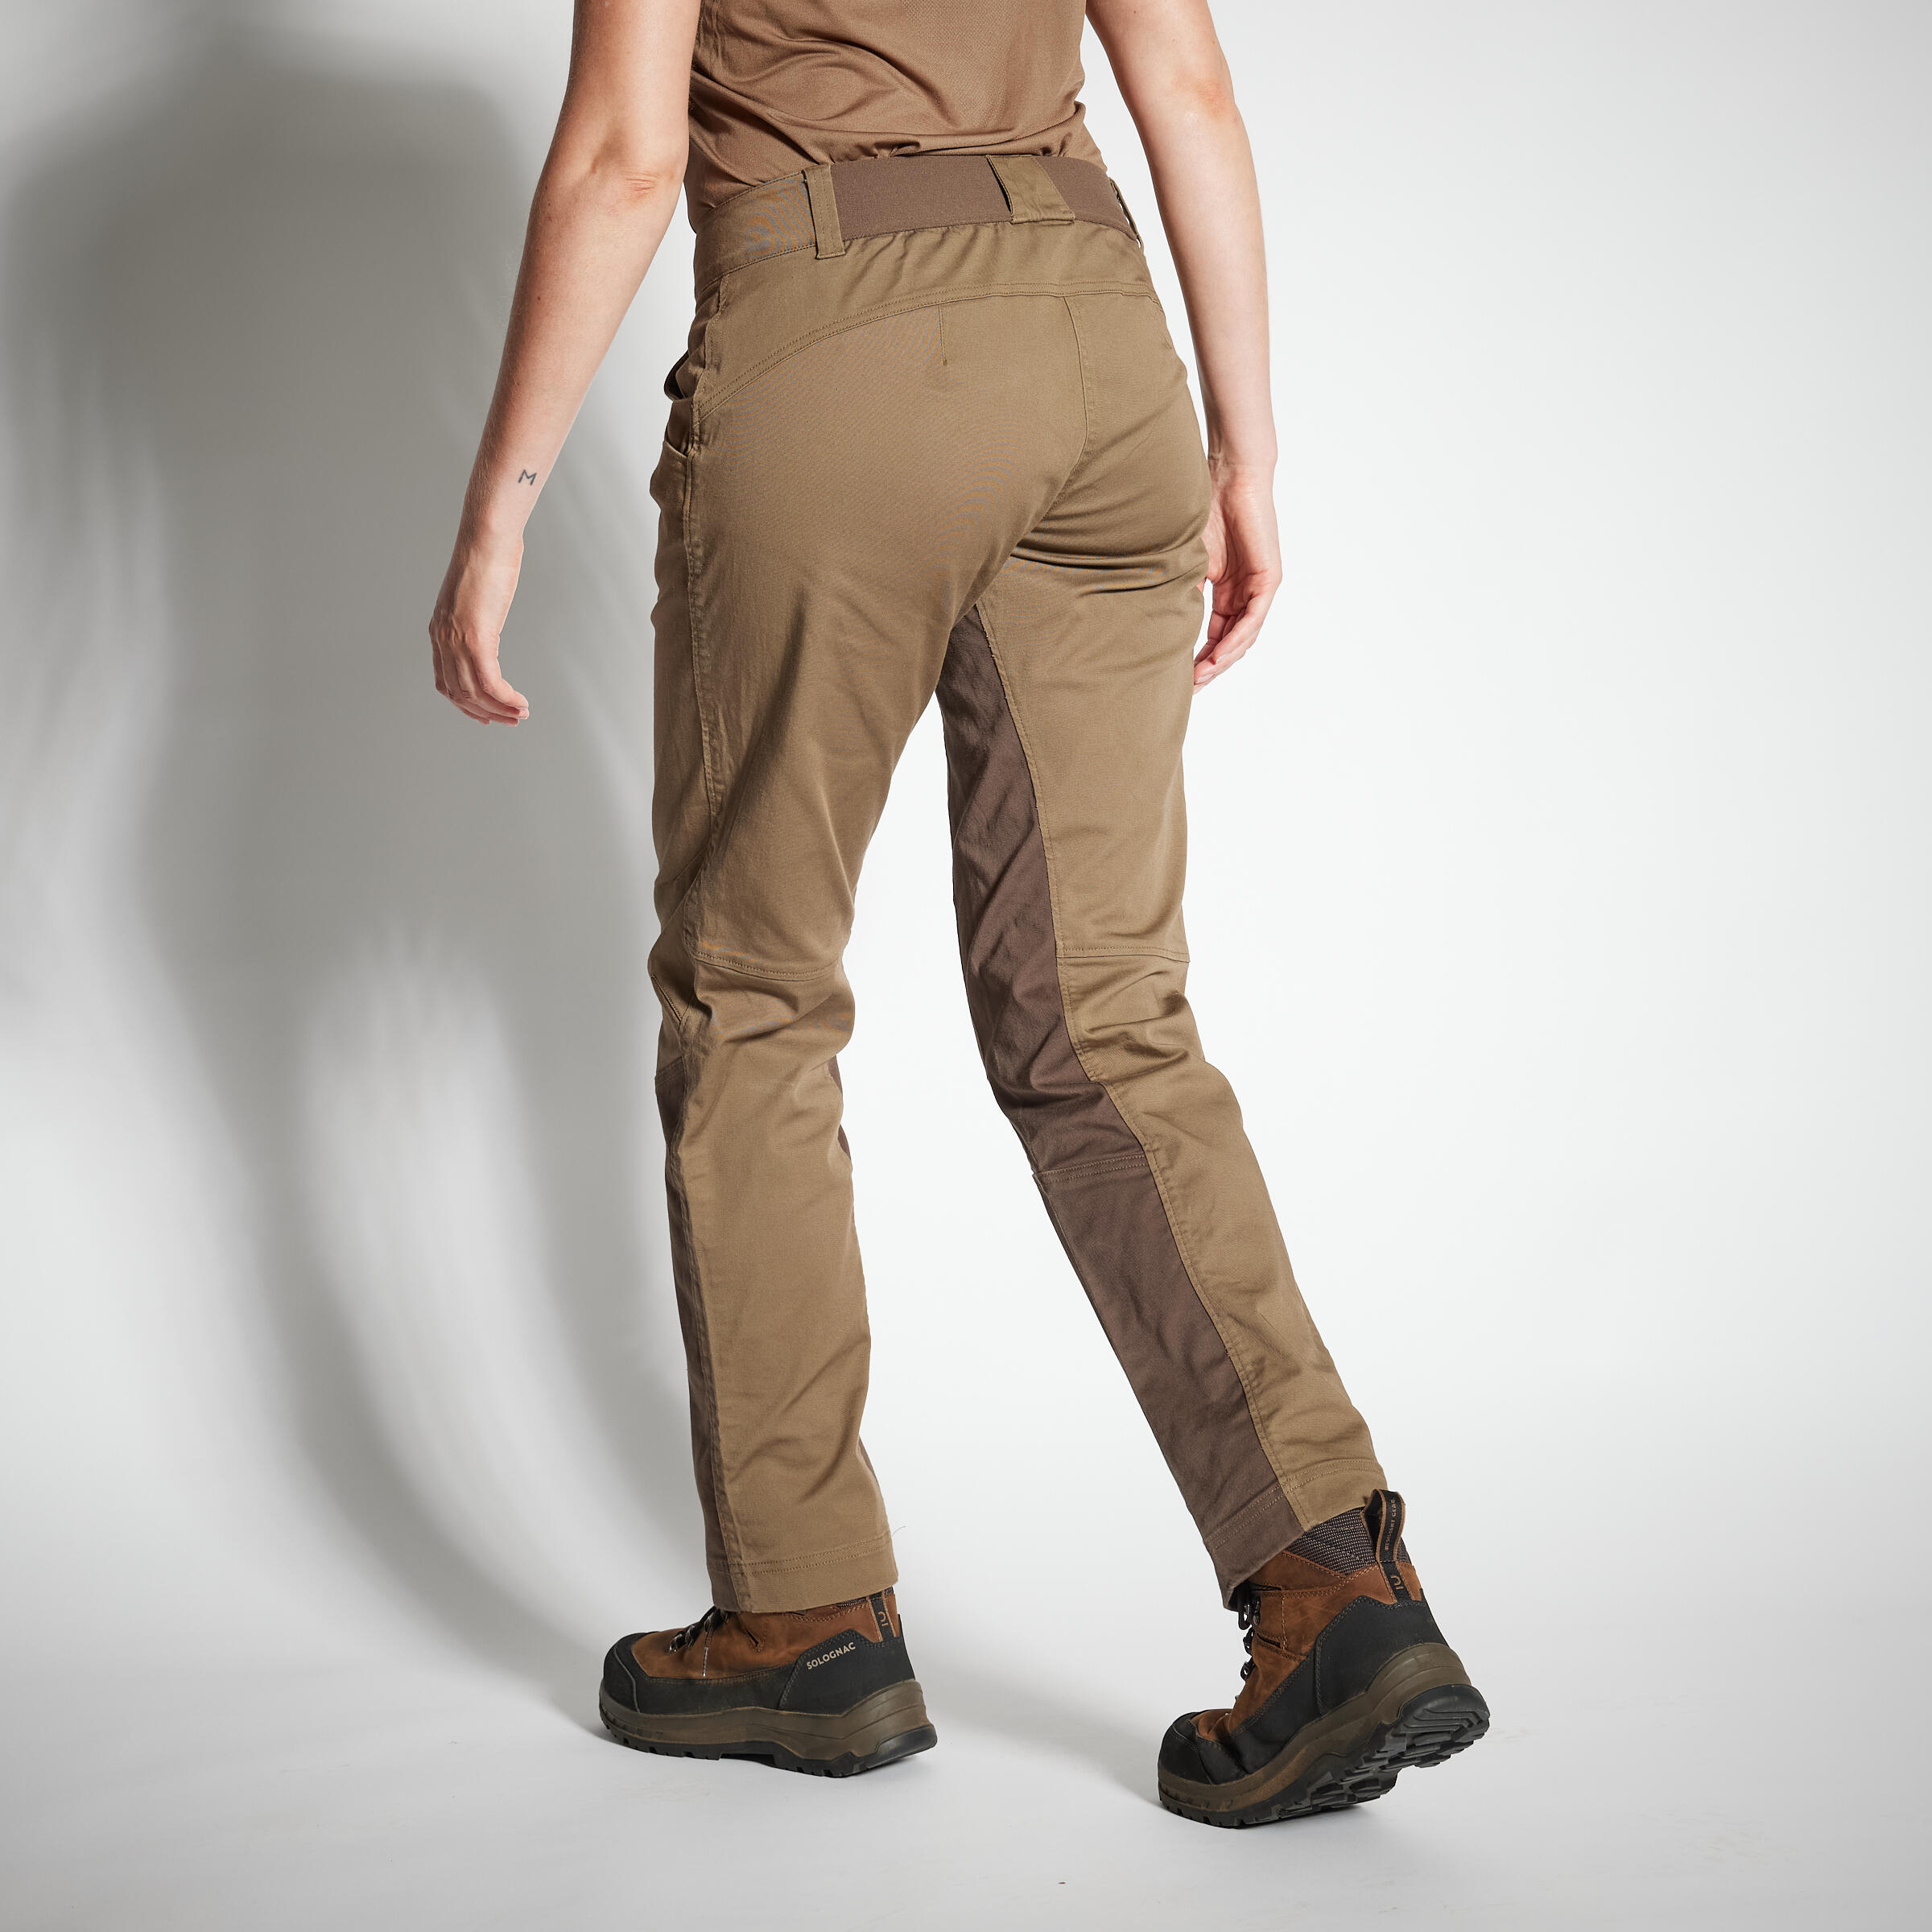 Pinewood Abisko Hybrid Pant - Walking trousers Men's, Free EU Delivery